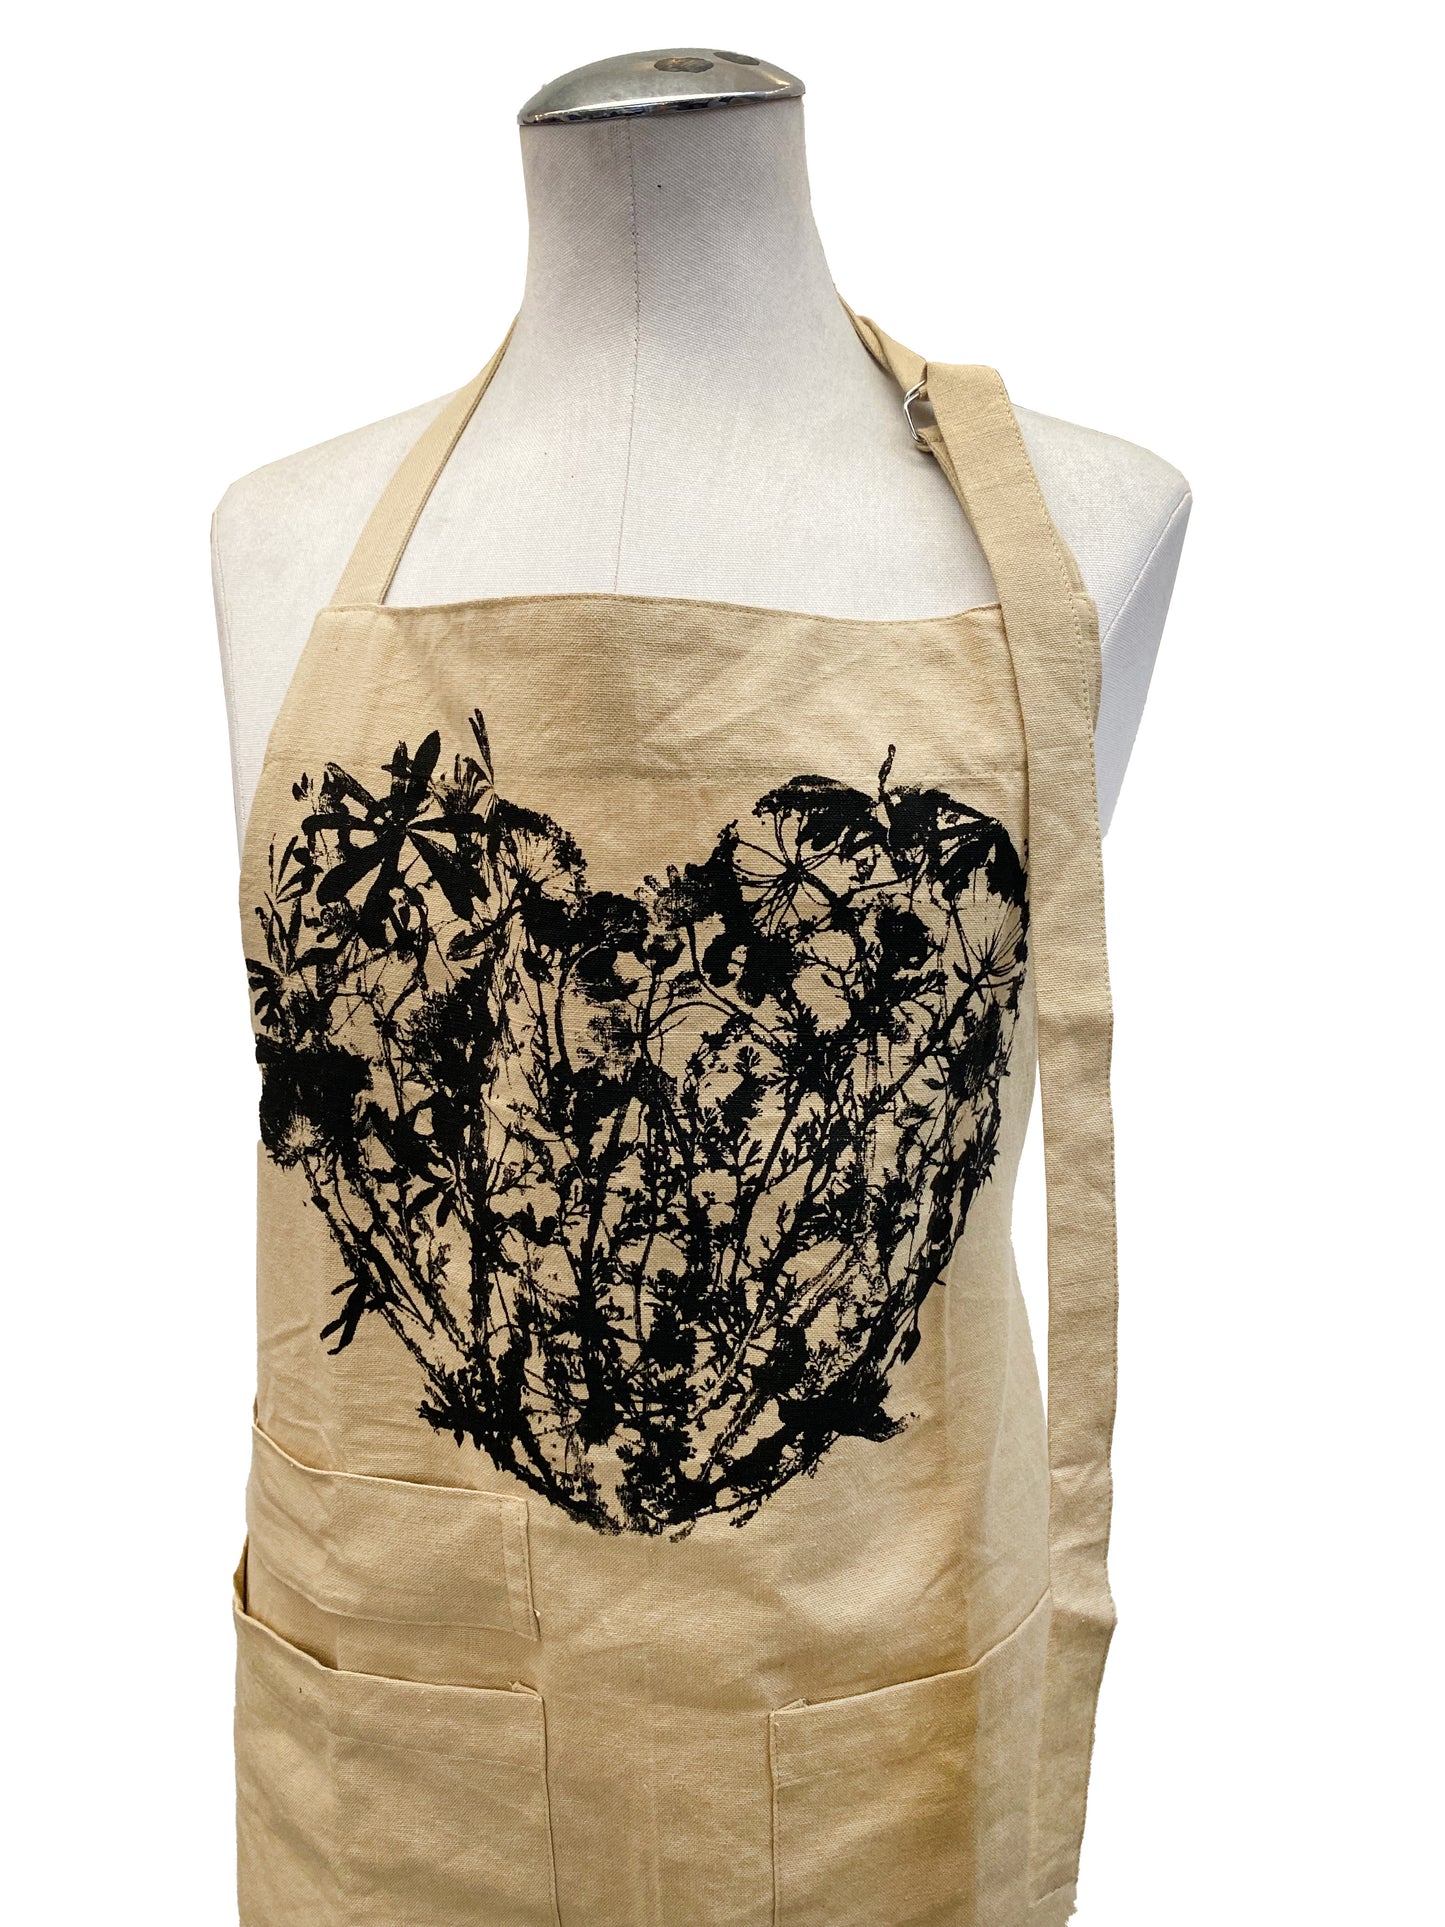 Hand Printed Wildflowers Heart Apron